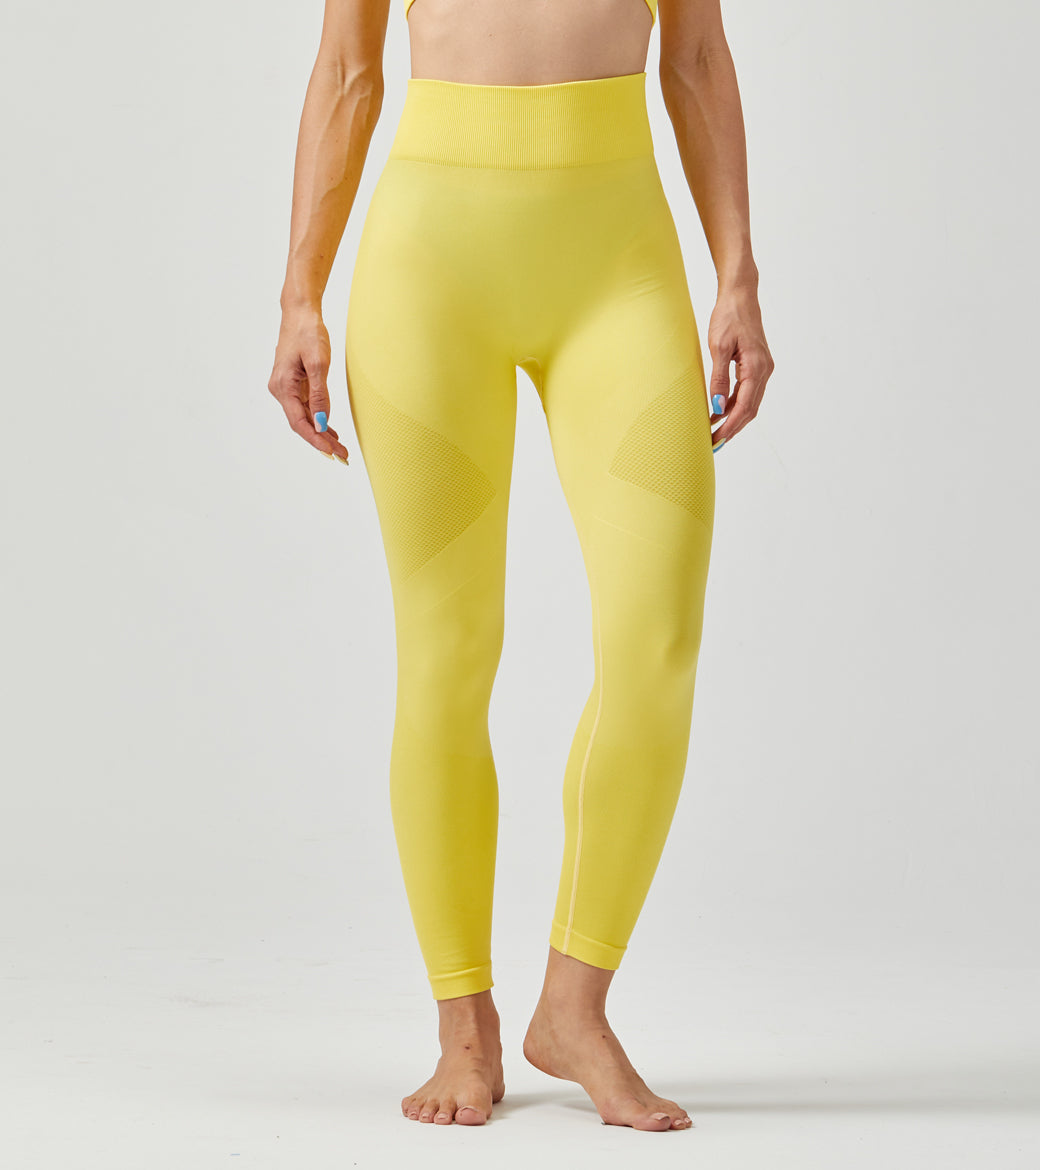 LOVESOFT Yellow Seamless Leggings for Women Yoga Workout Tight Pants